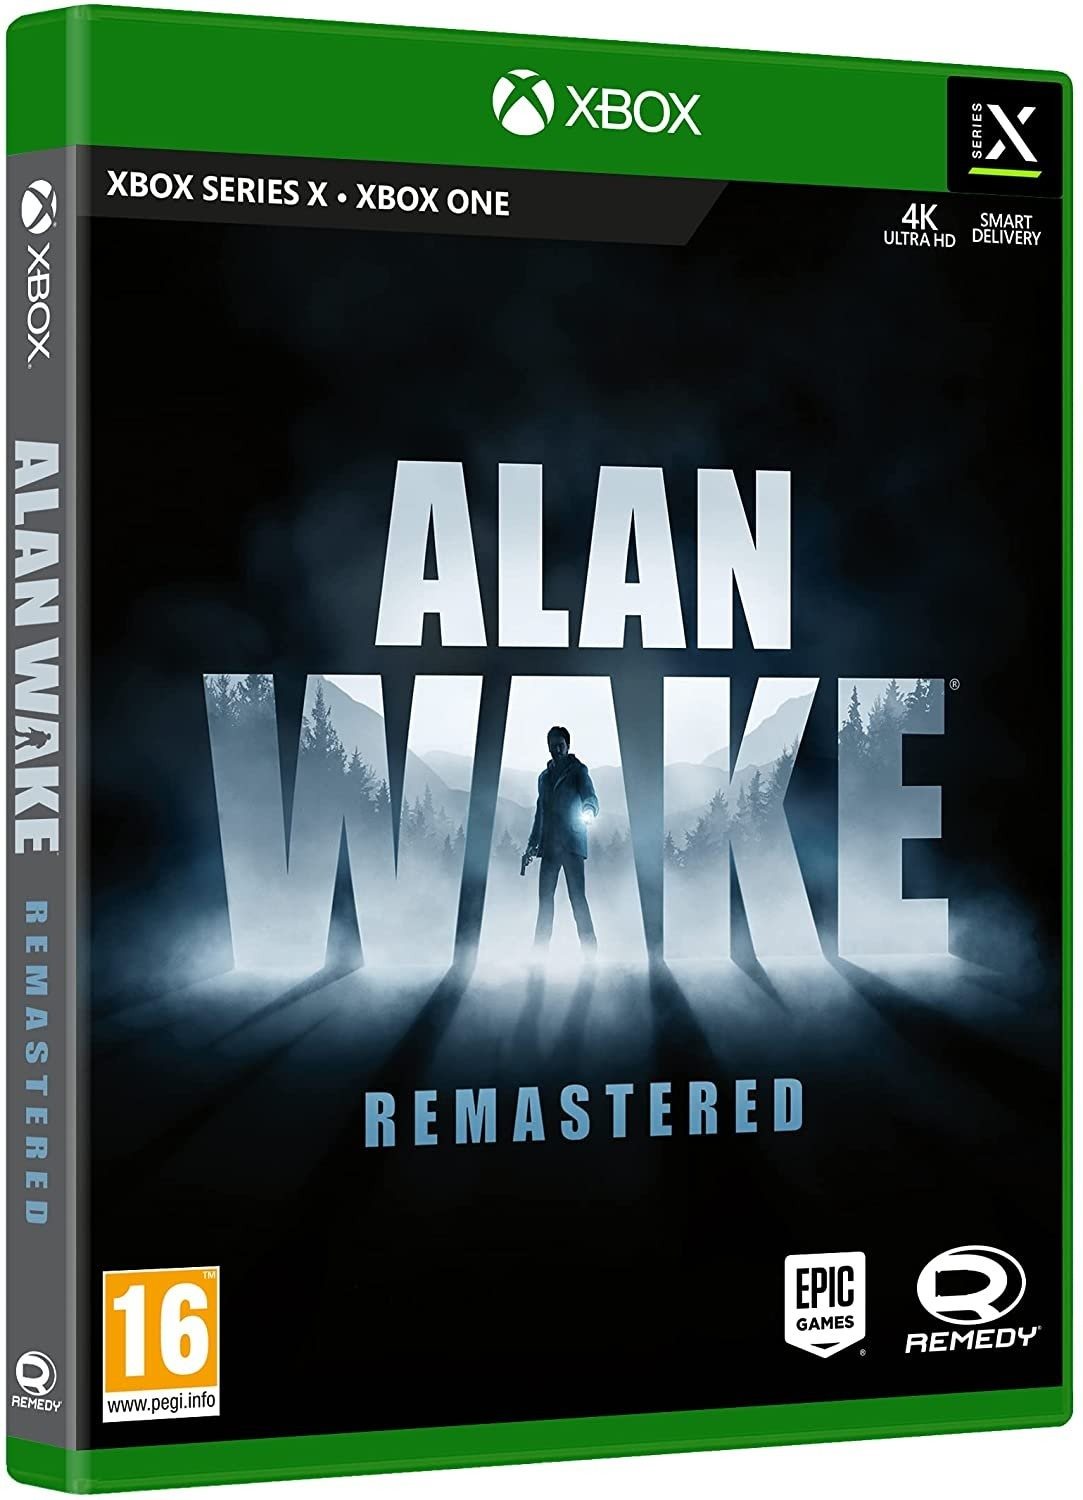 Konzol játék Alan Wake Remastered - Xbox